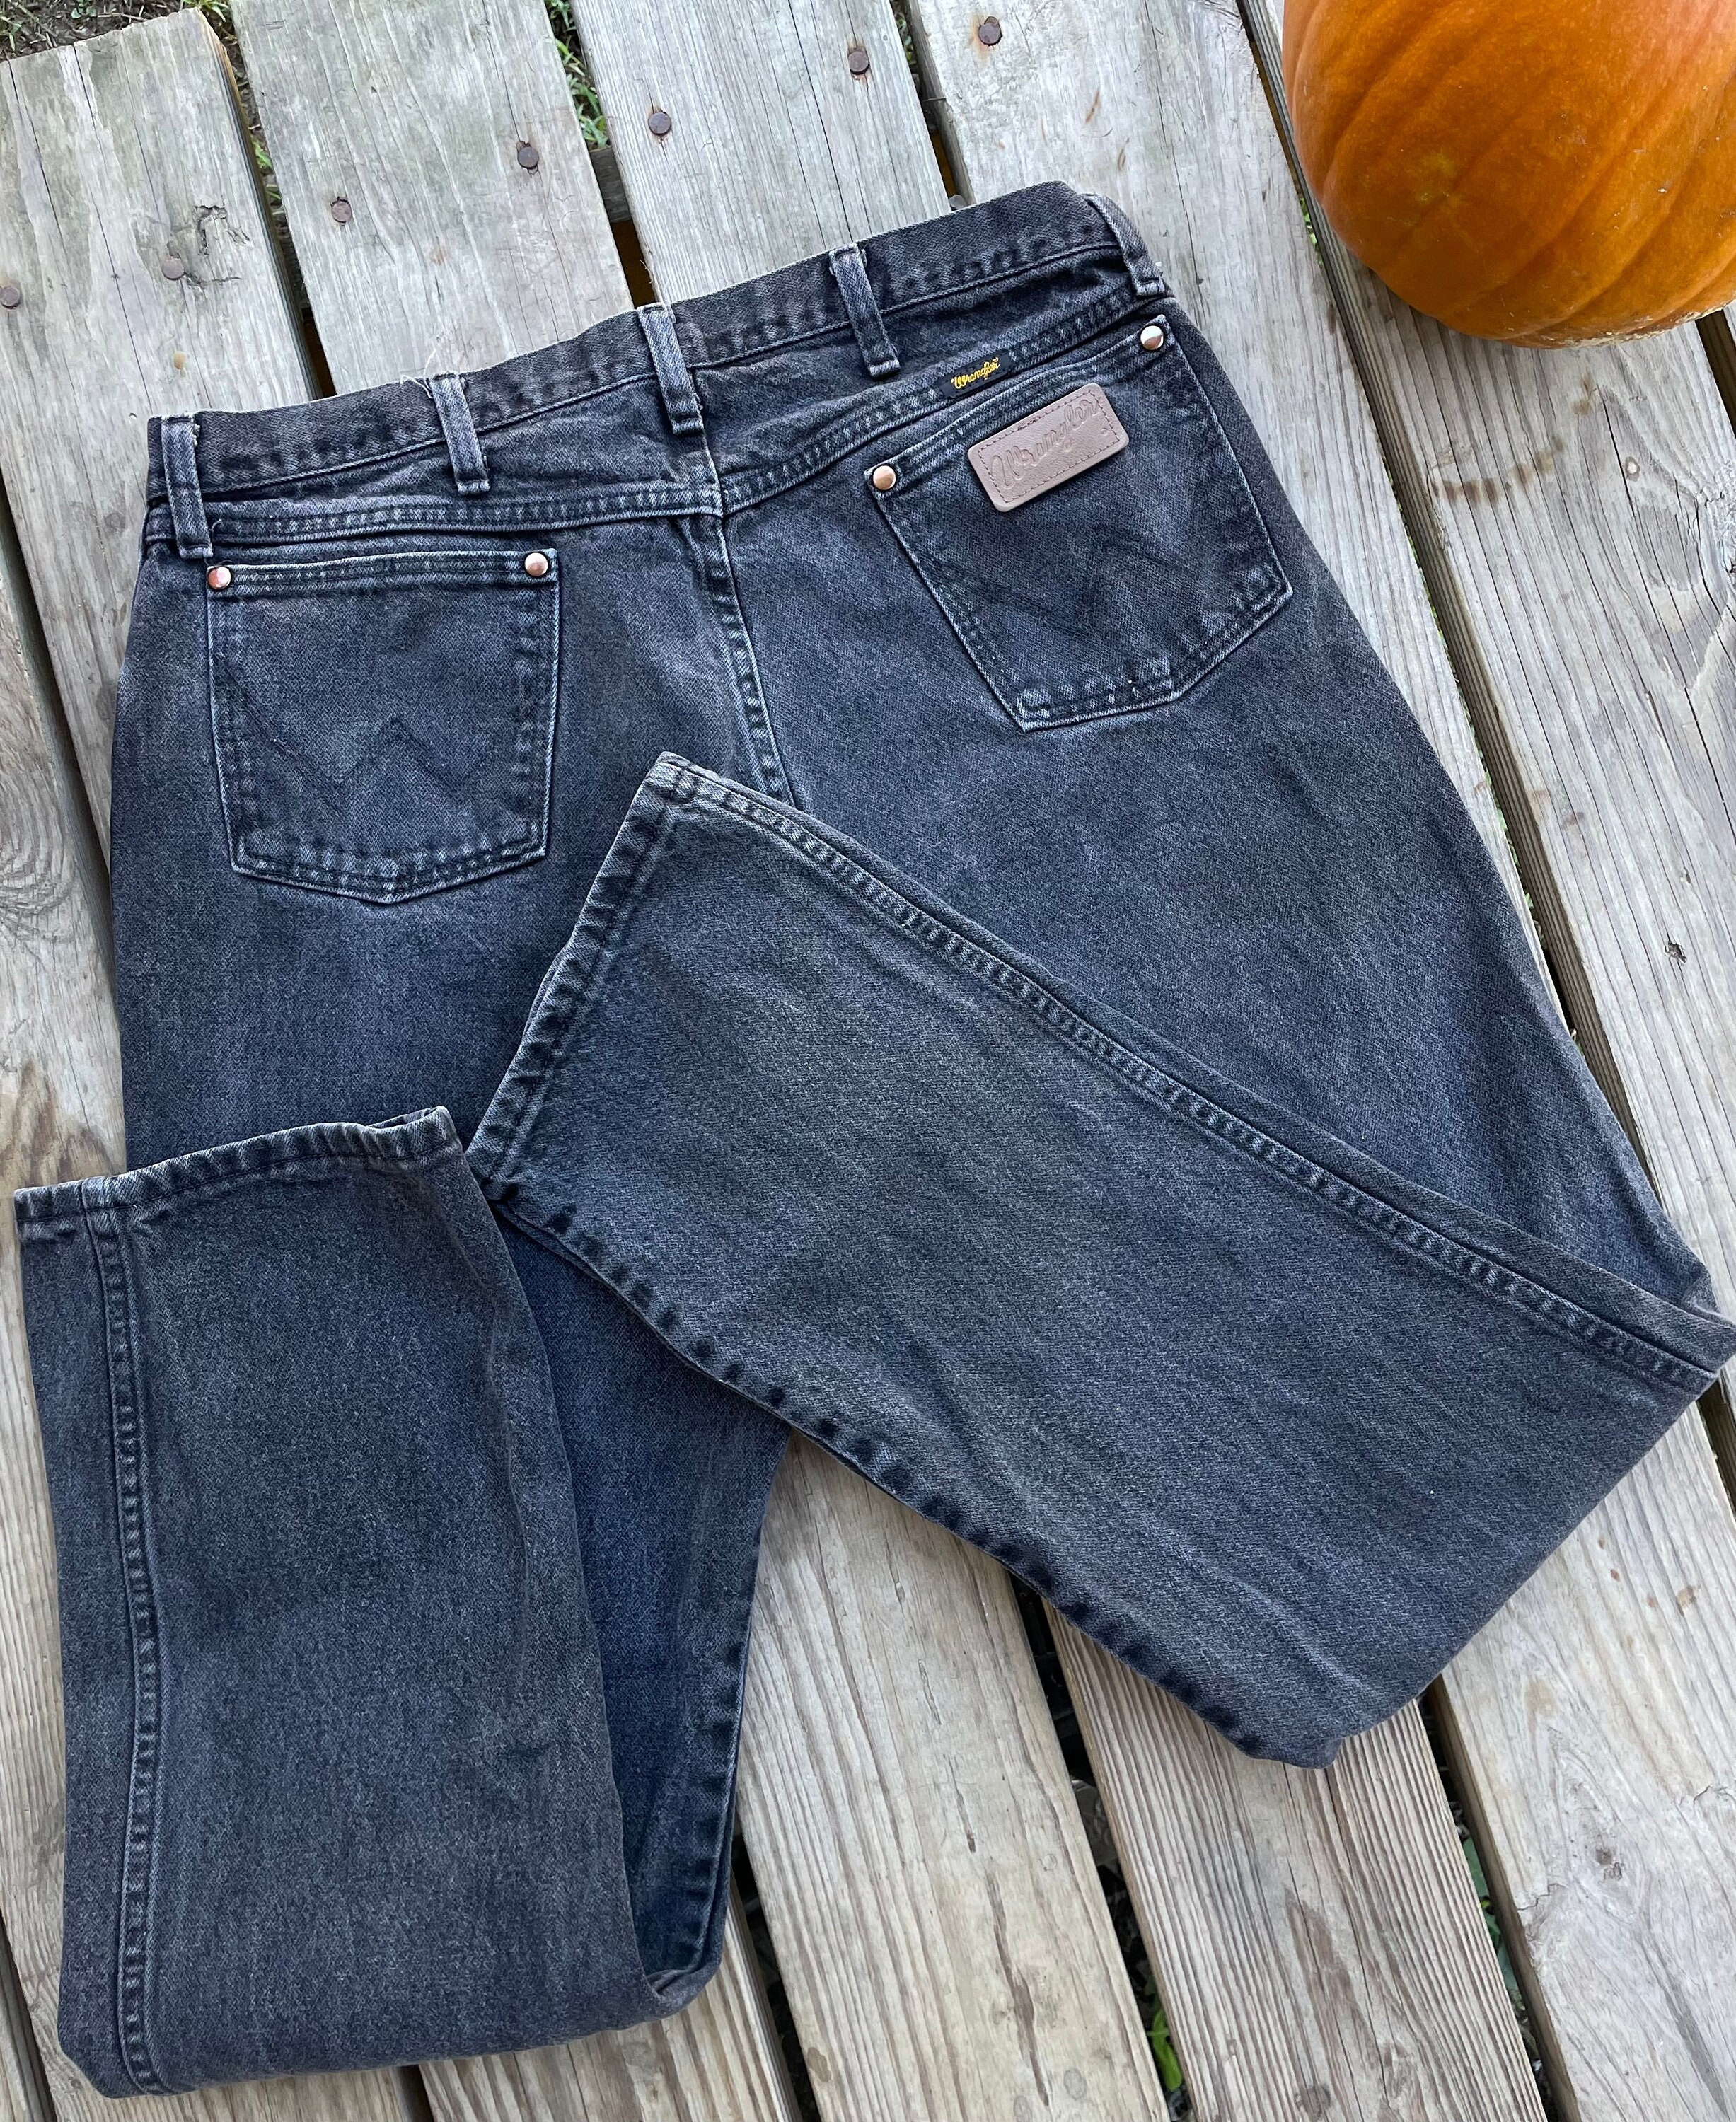 Vintage Wrangler Jeans Men's 36 X 32 Black Wash Made in Mexico 90s